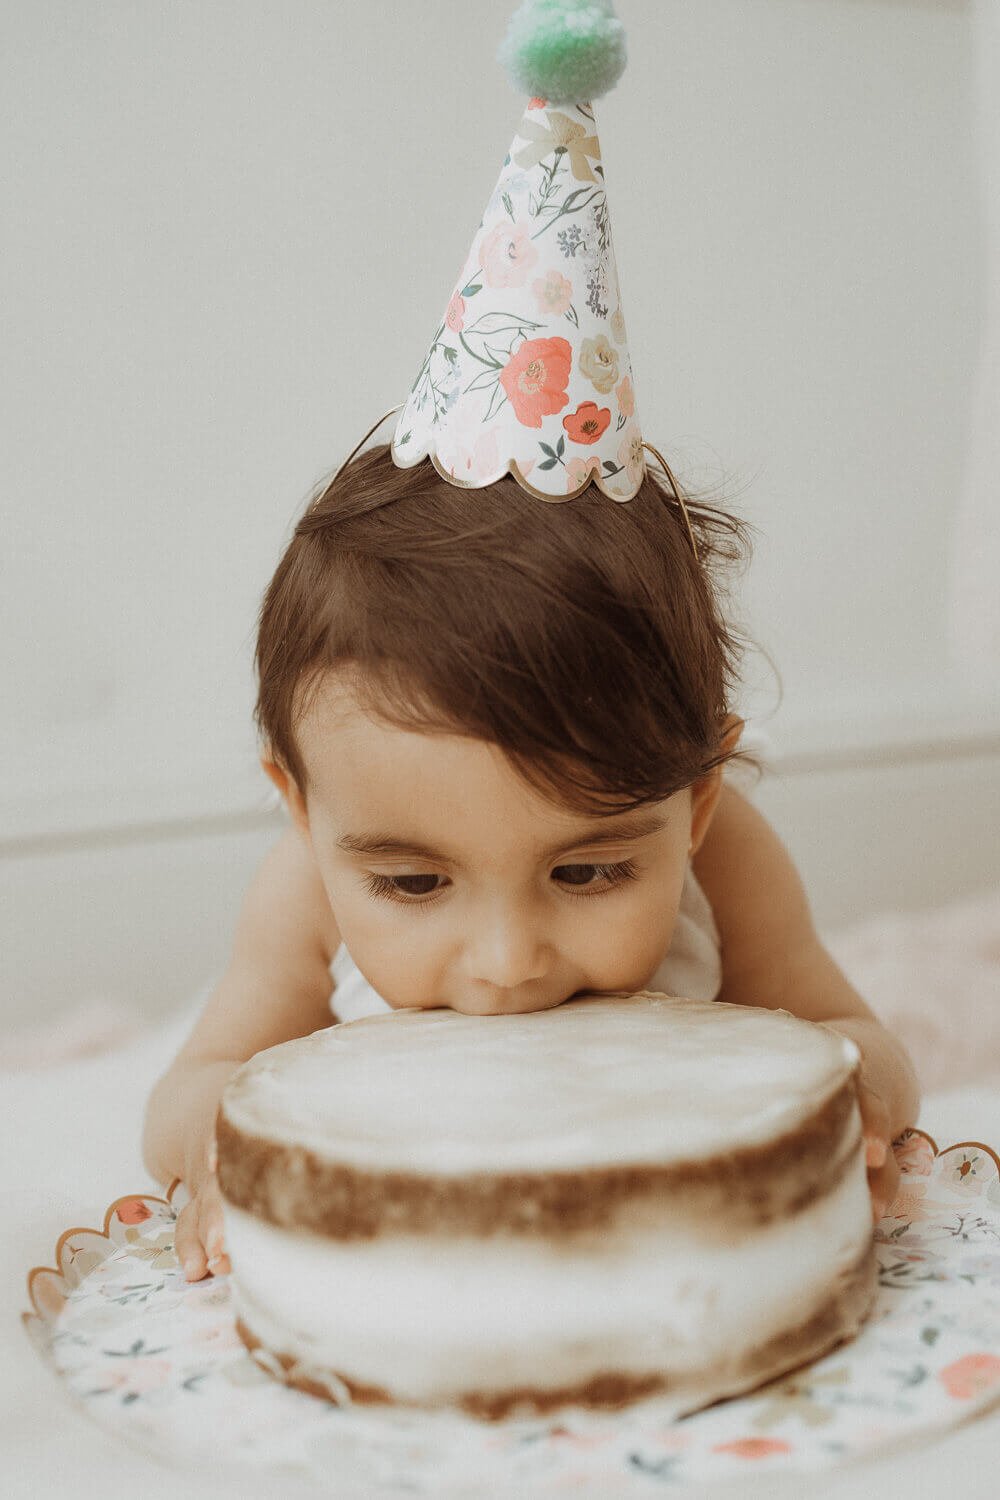 Babys first birthday with smash cake celebration.